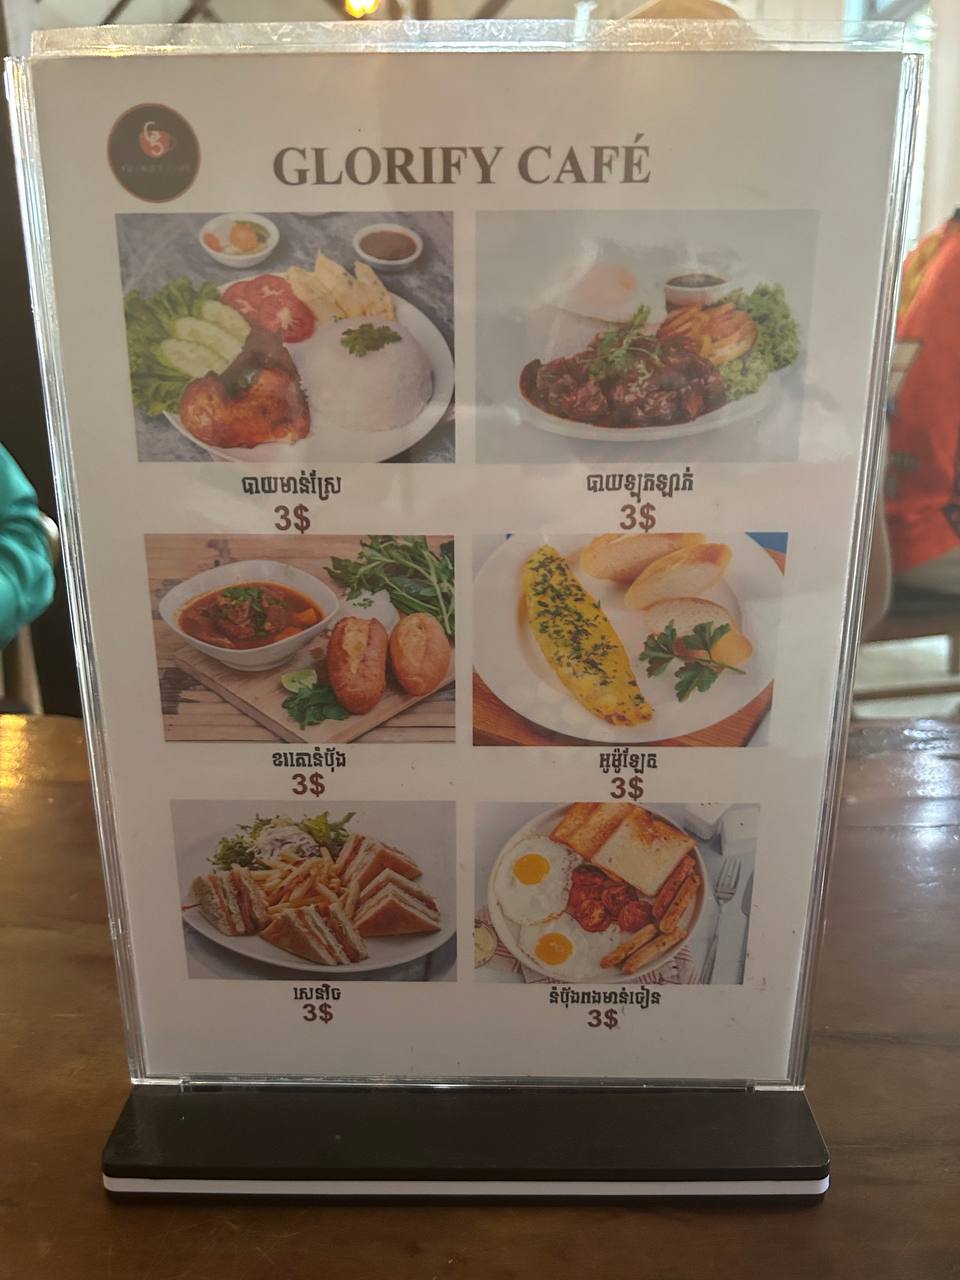 Best Western Restaurant in Kampong Chhnang - Glorify Cafe